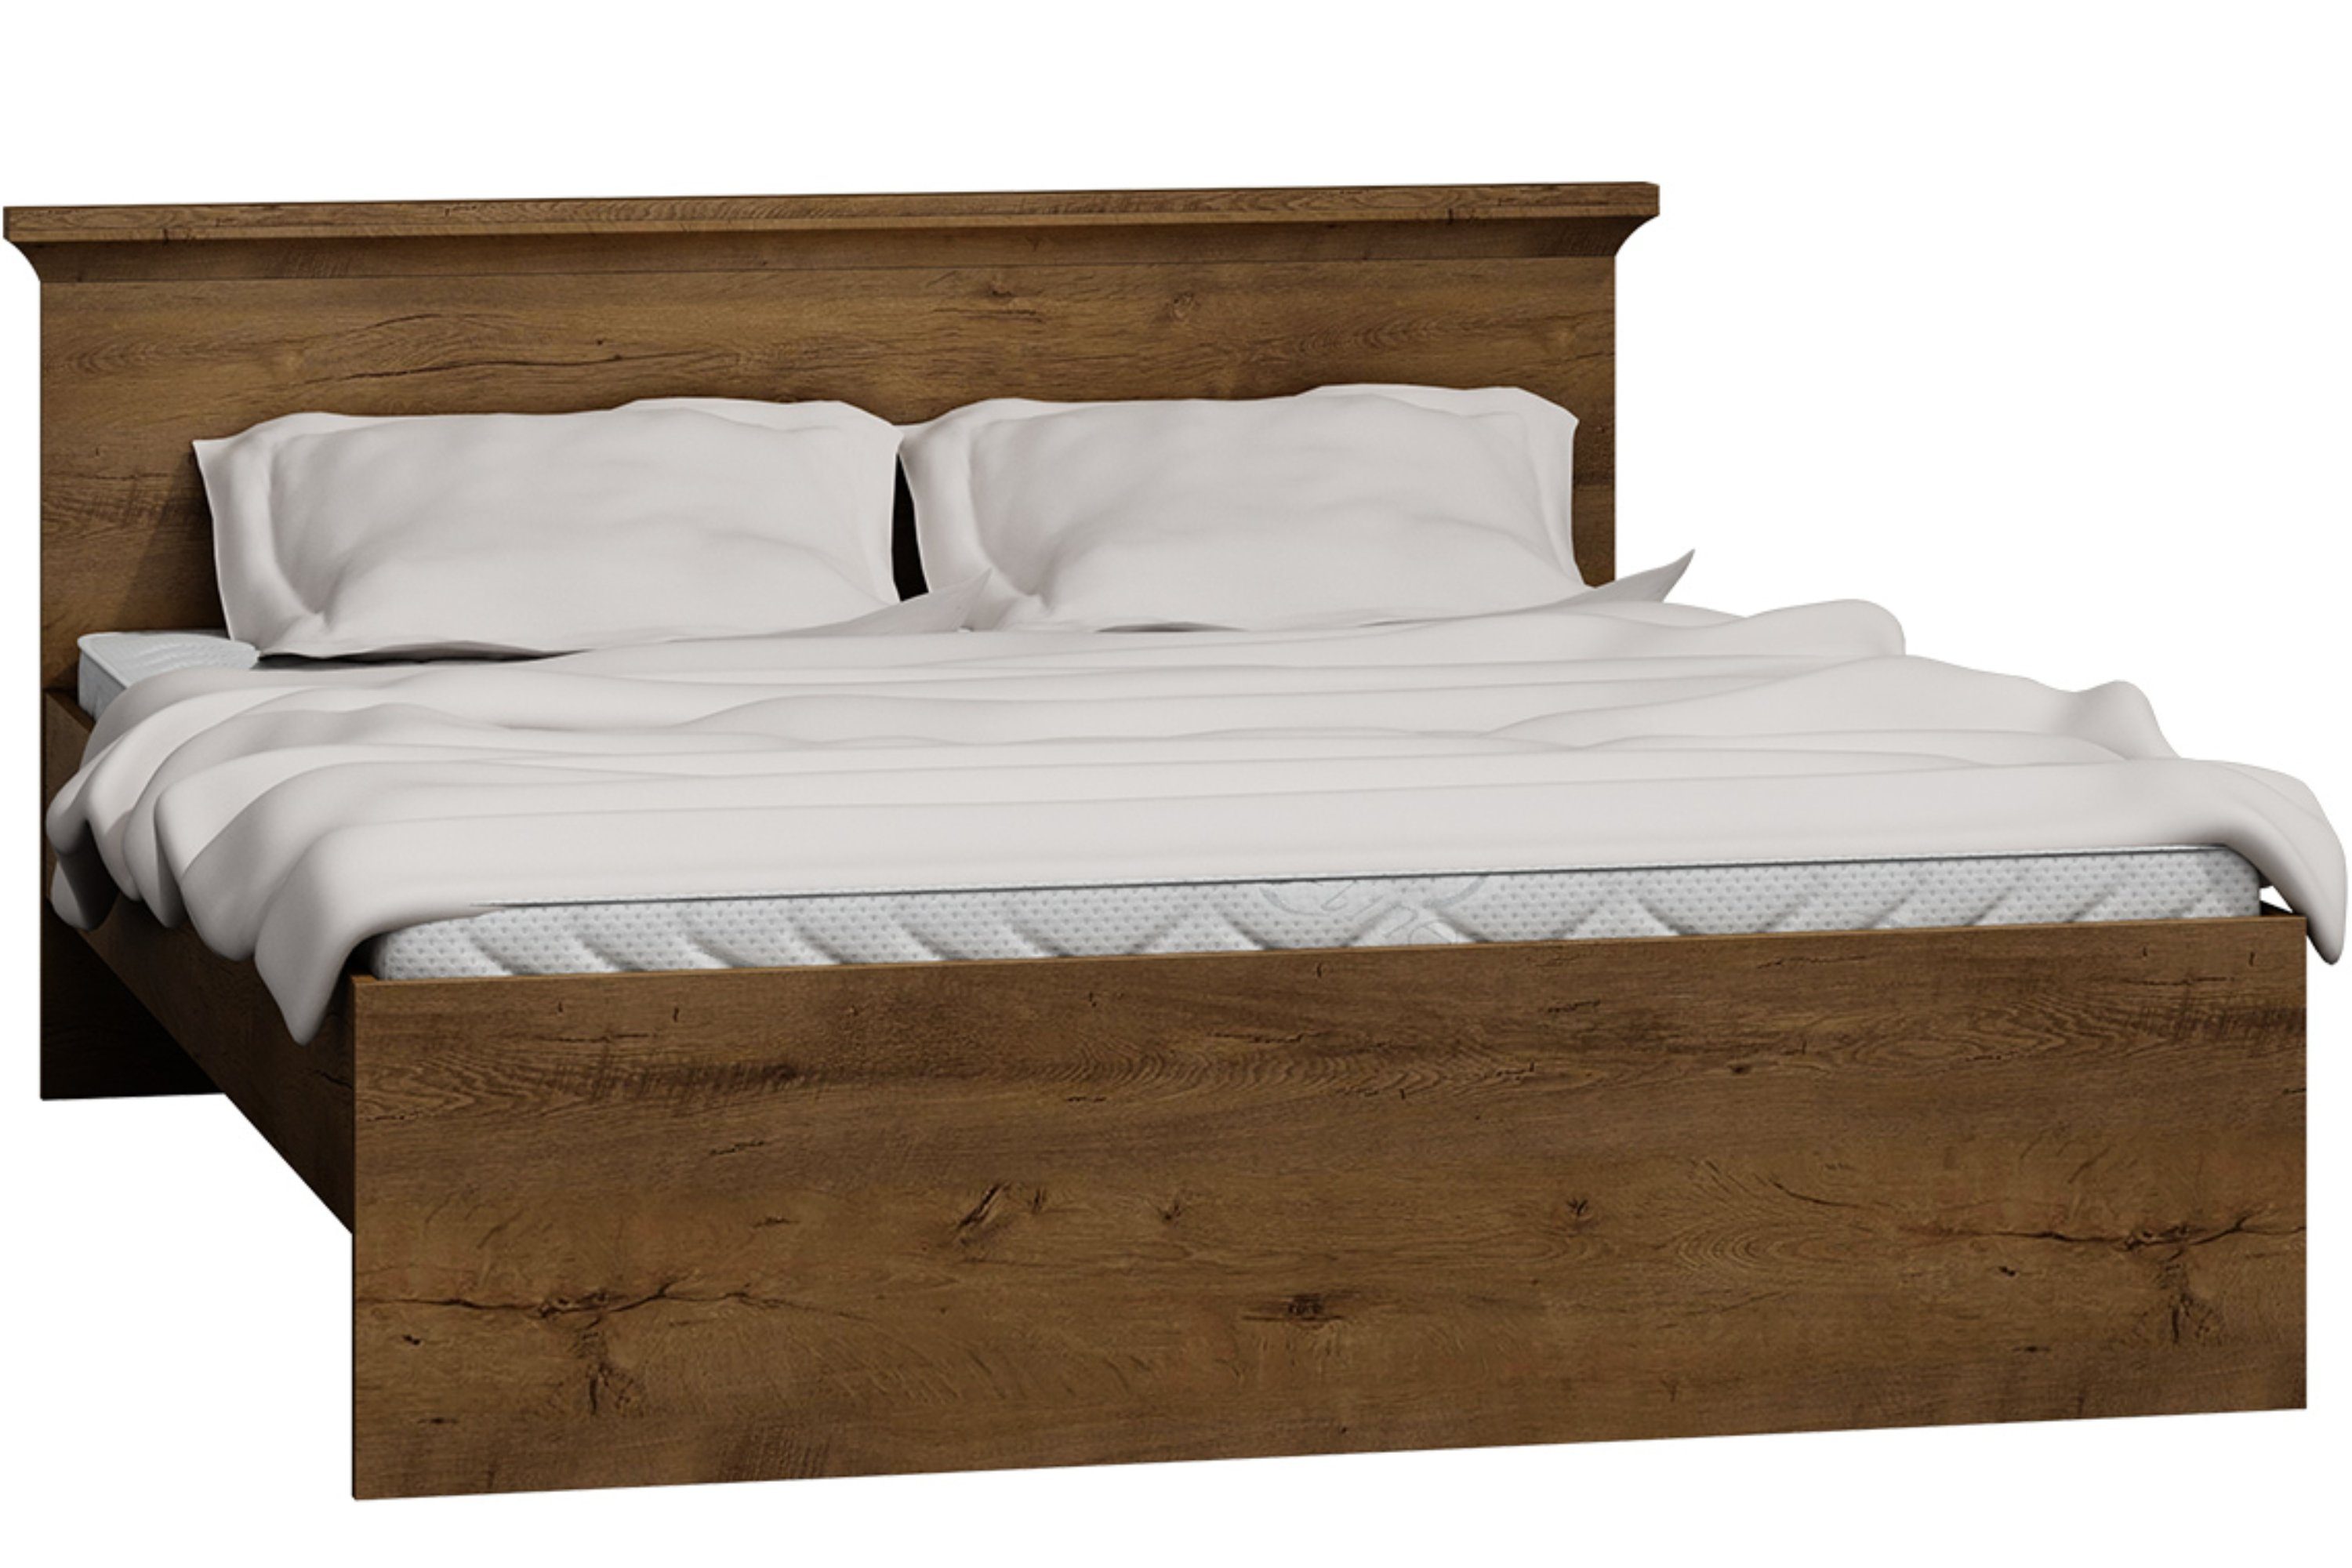 Konsimo Bett VETIS Bett mit Rahmen, mit Kopfstütze, zeitloses Design